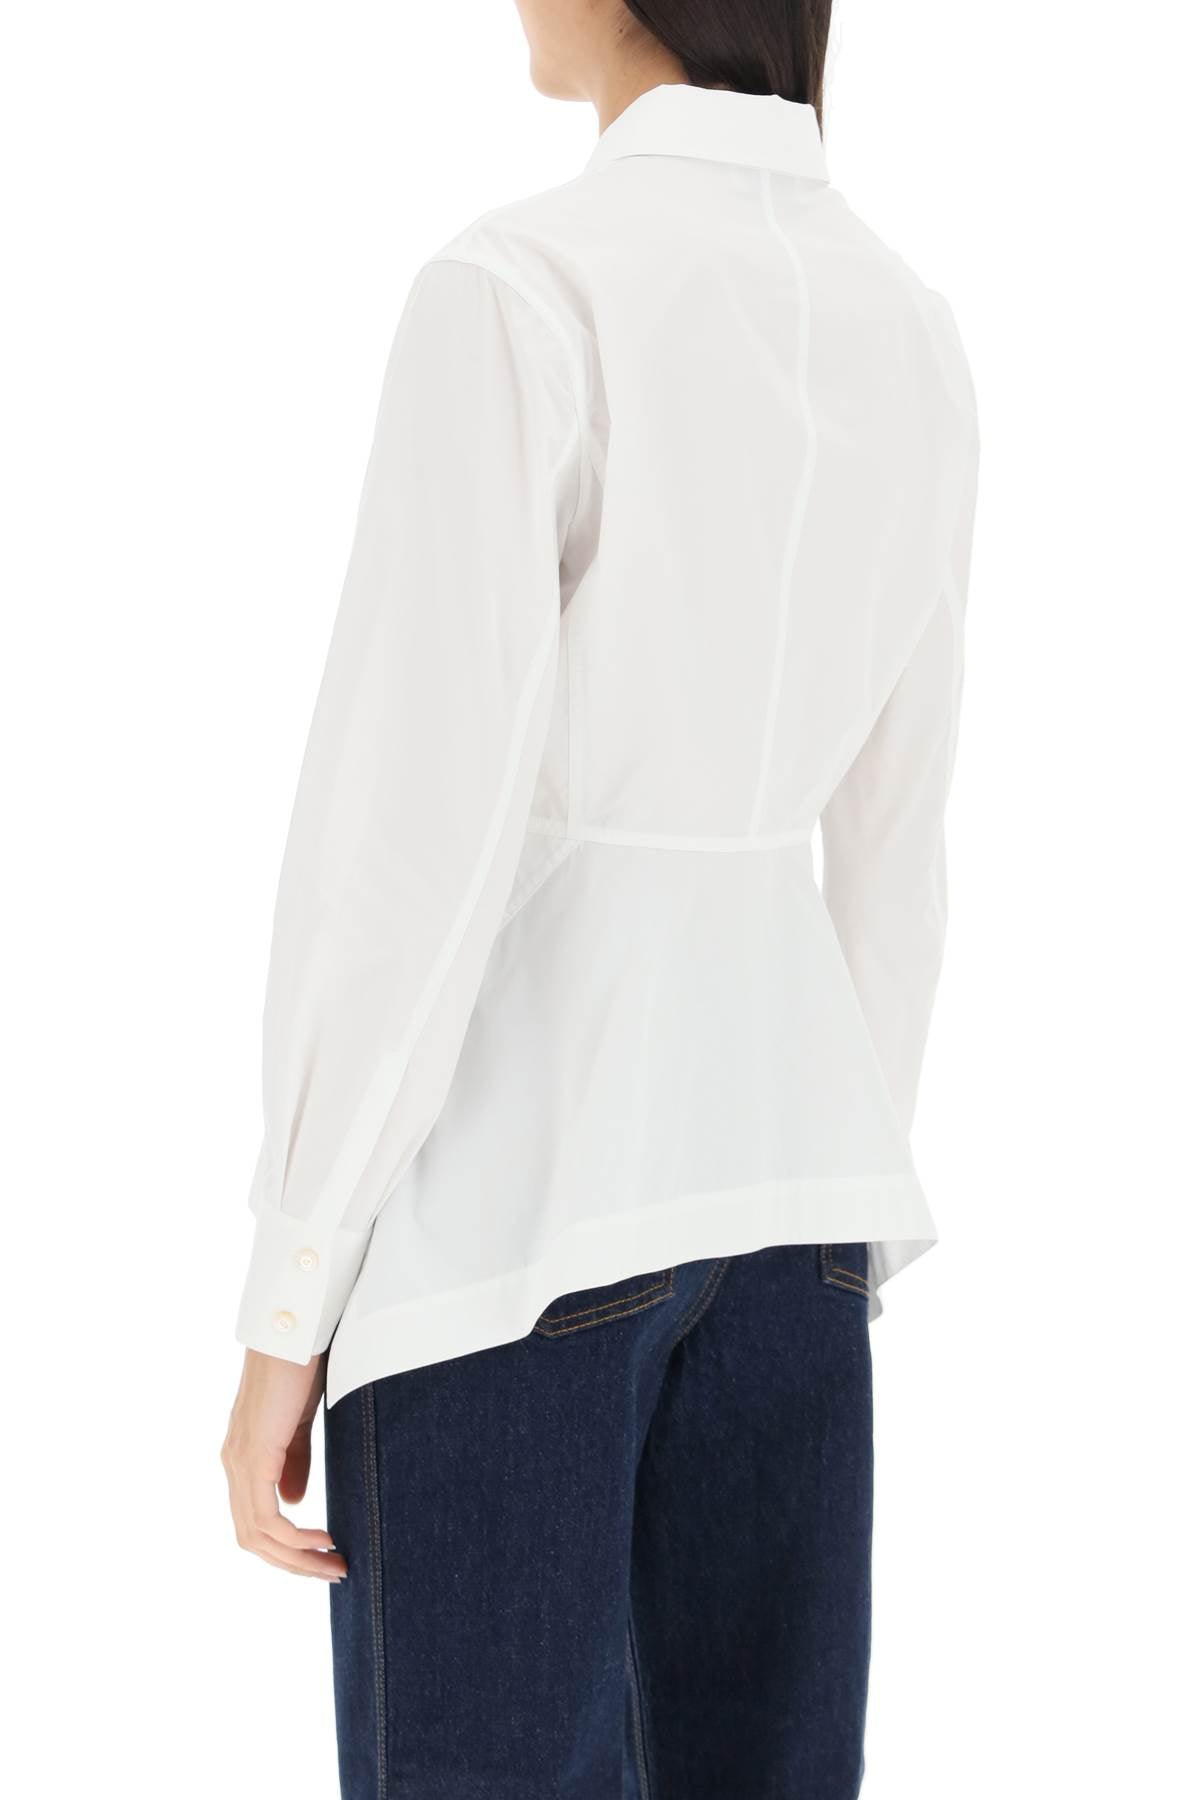 TORY BURCH Asymmetrical Cotton Poplin Shirt for Women - SS23 Collection